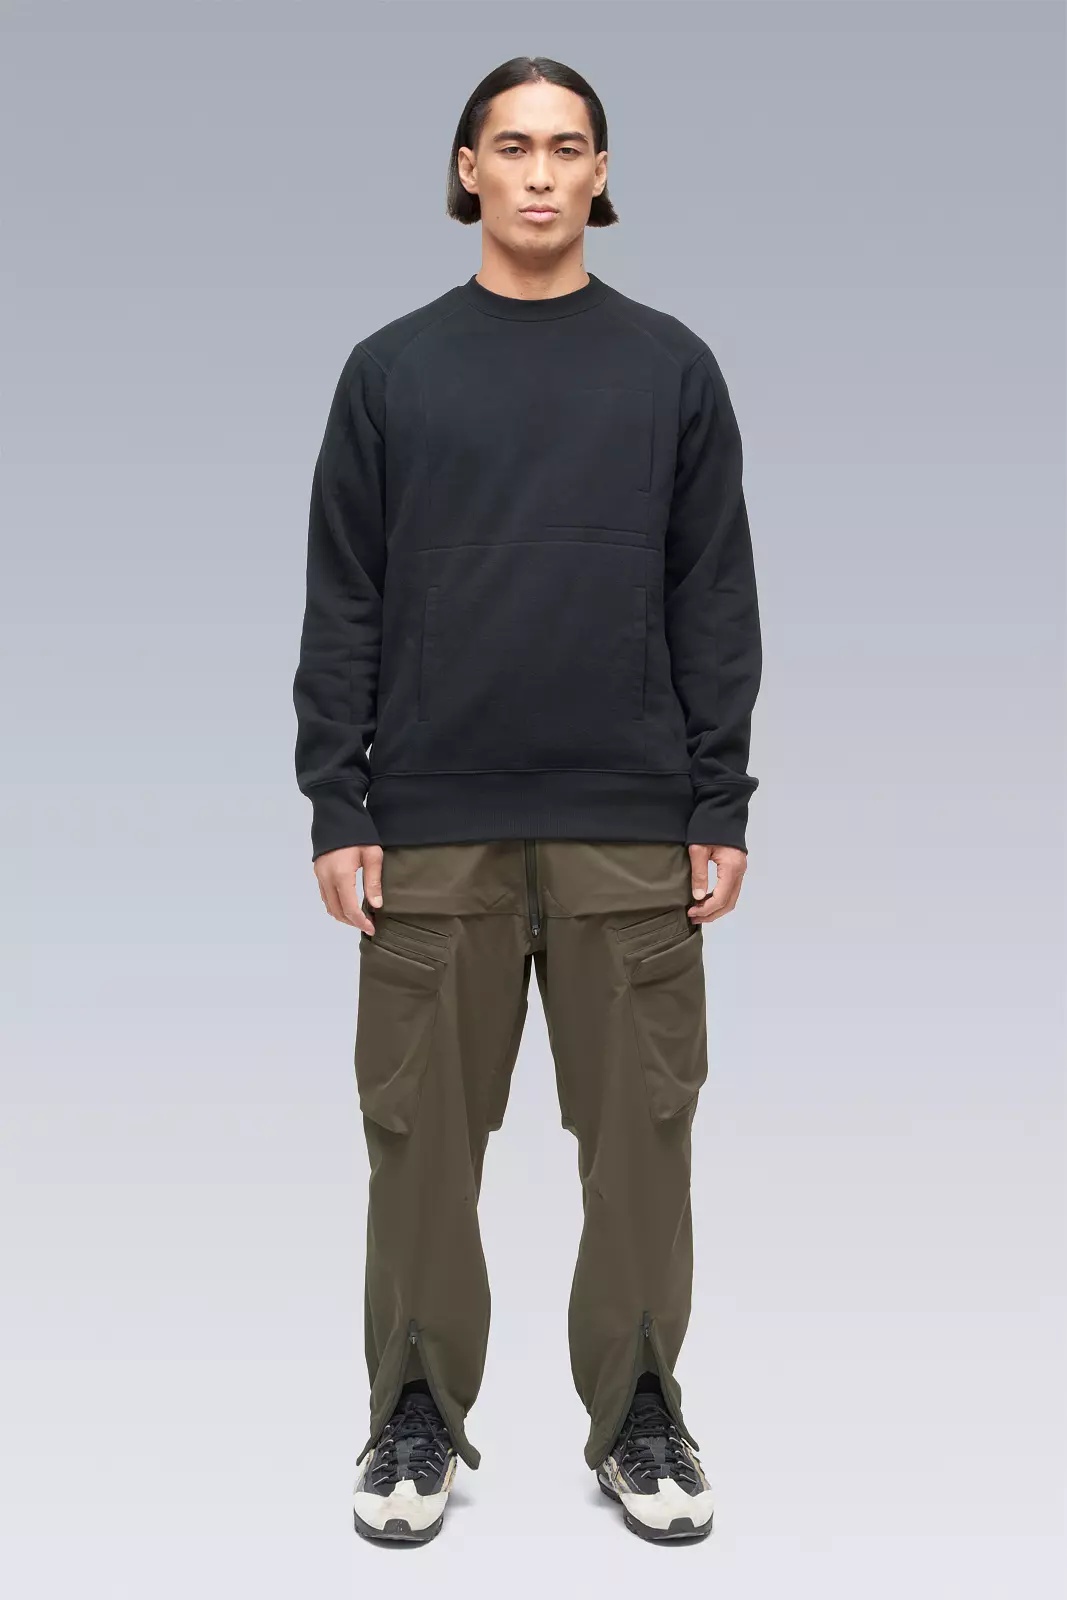 S14-BR Cotton Crewneck Sweatshirt Gray Melange - 13